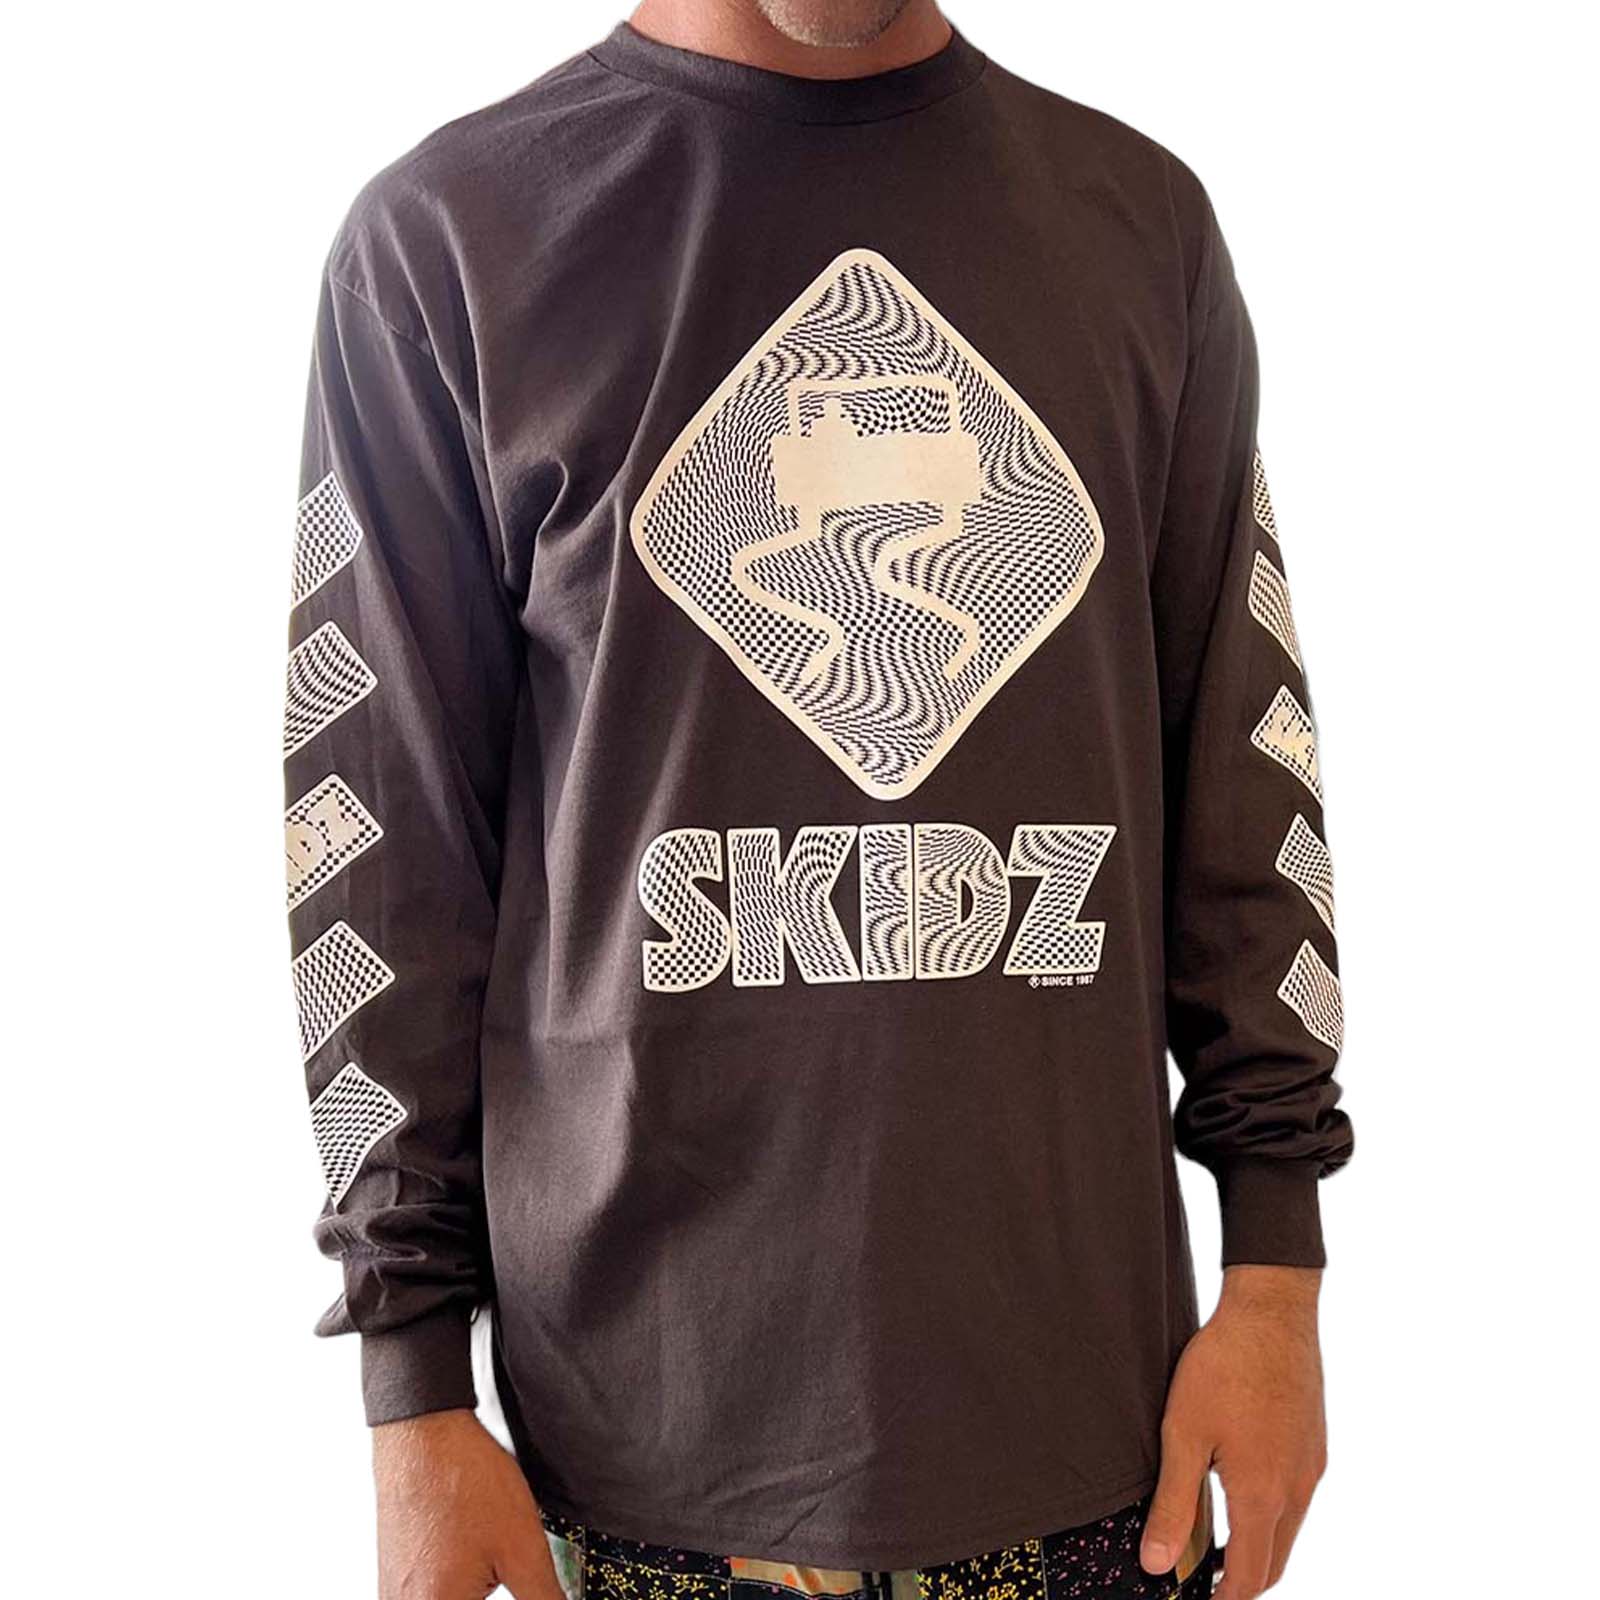 Skidz Shirts & Tops Trippy Check Long Sleeve Tee - Dark Chocolate Brown